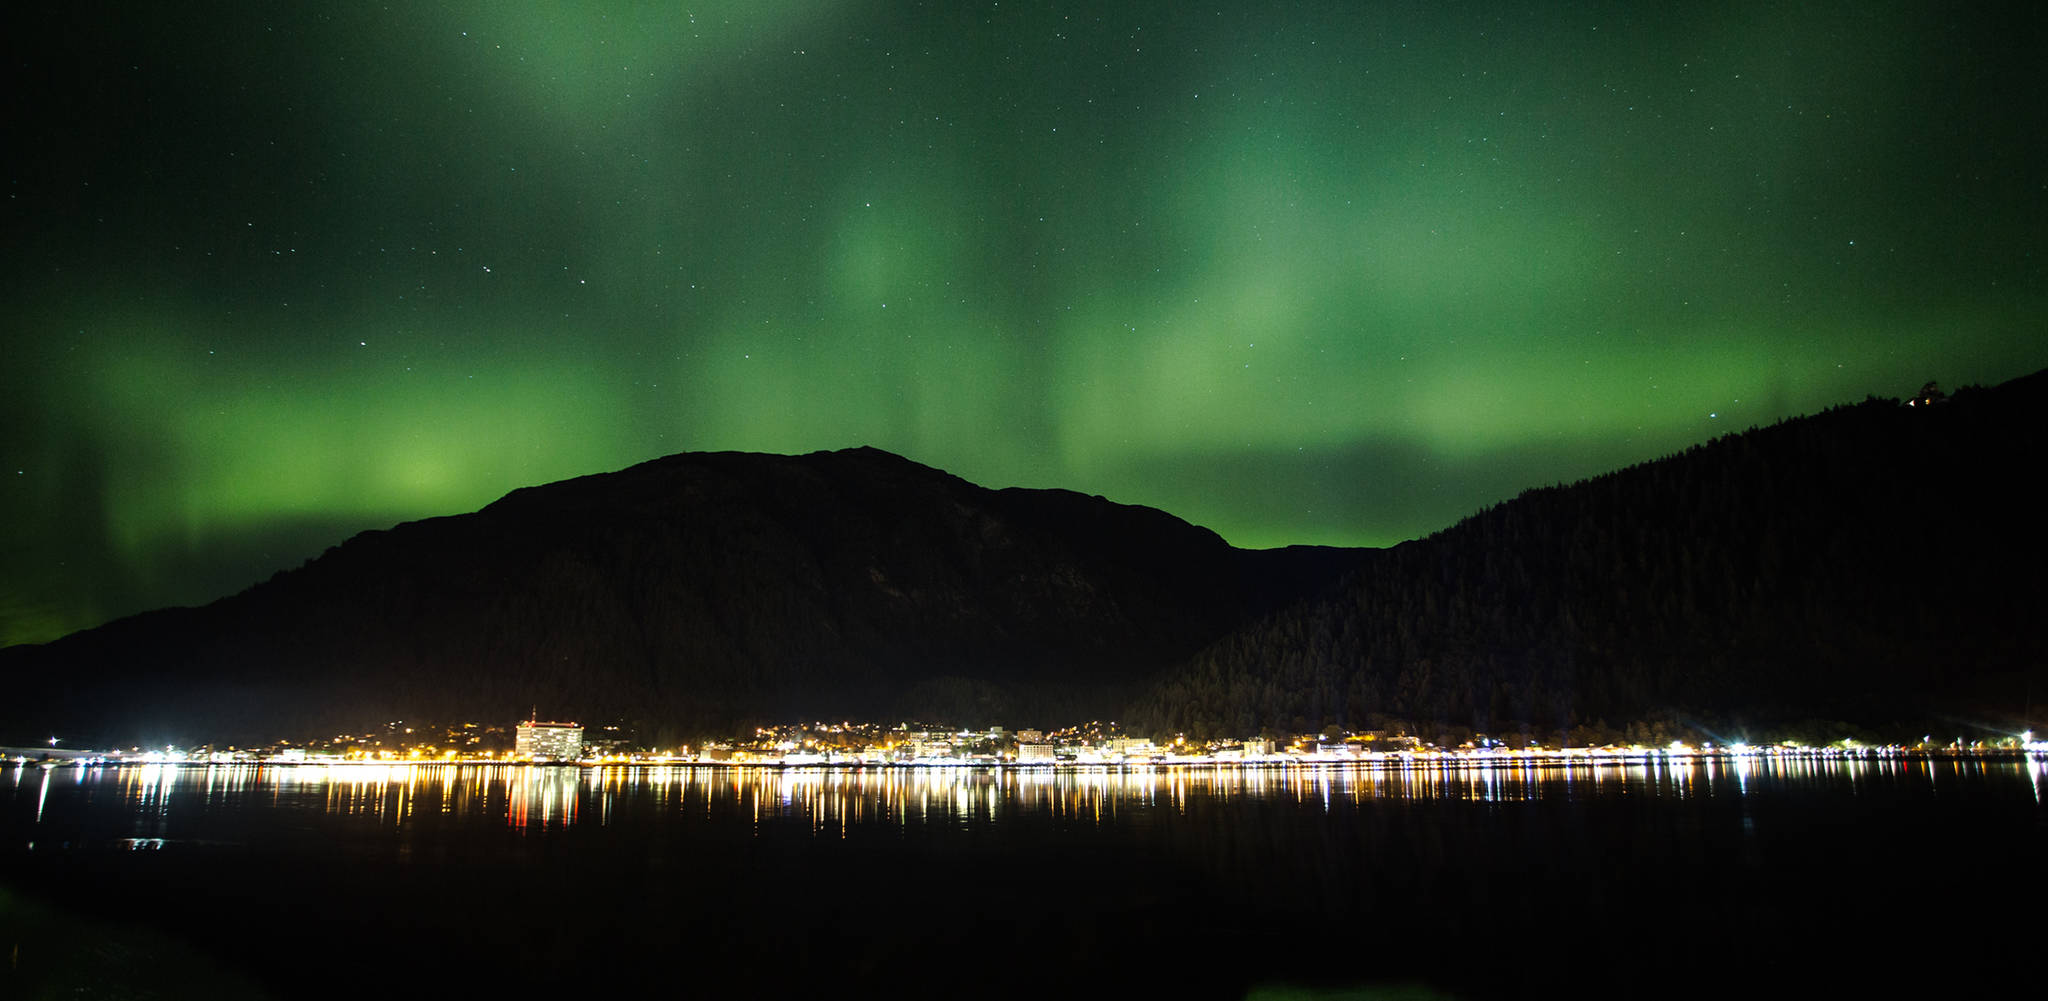 The aurora borealis shines in the night skies above Juneau on Friday, Sept. 27, 2019. (Courtesy Photo | Jack Beedle)